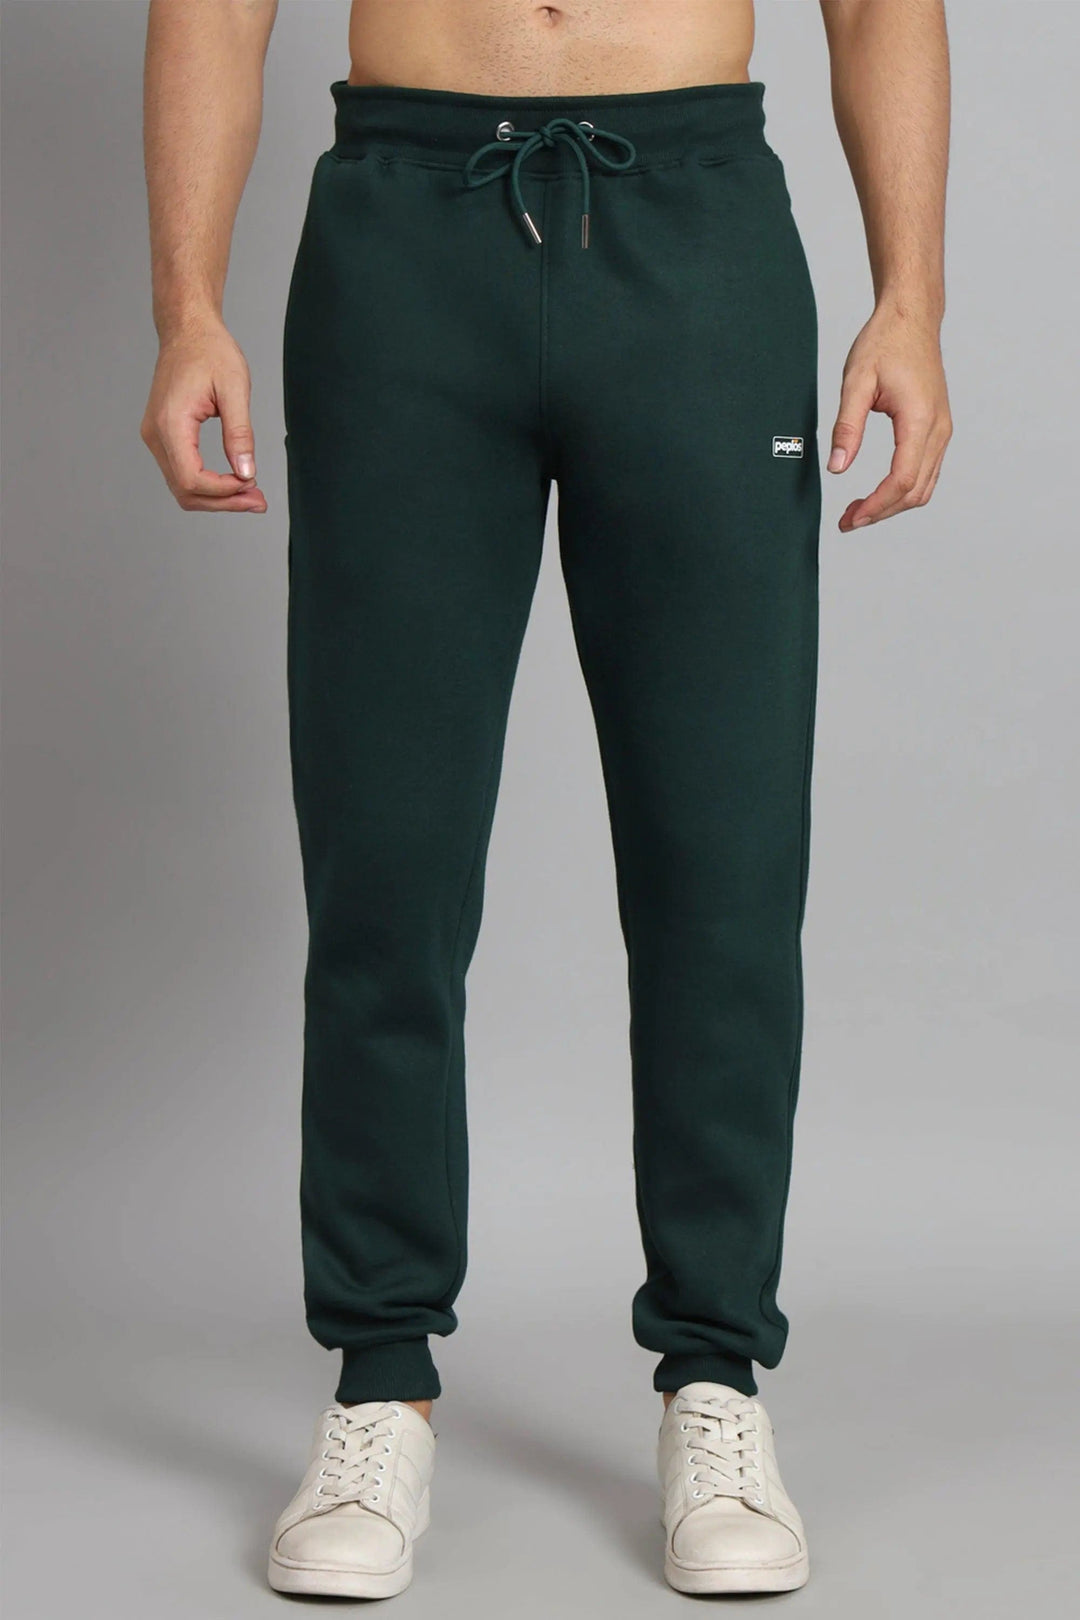 Regular Fit Printed Bottle Green Hoodie-Trouser Co-ord Set For Men - Peplos Jeans 